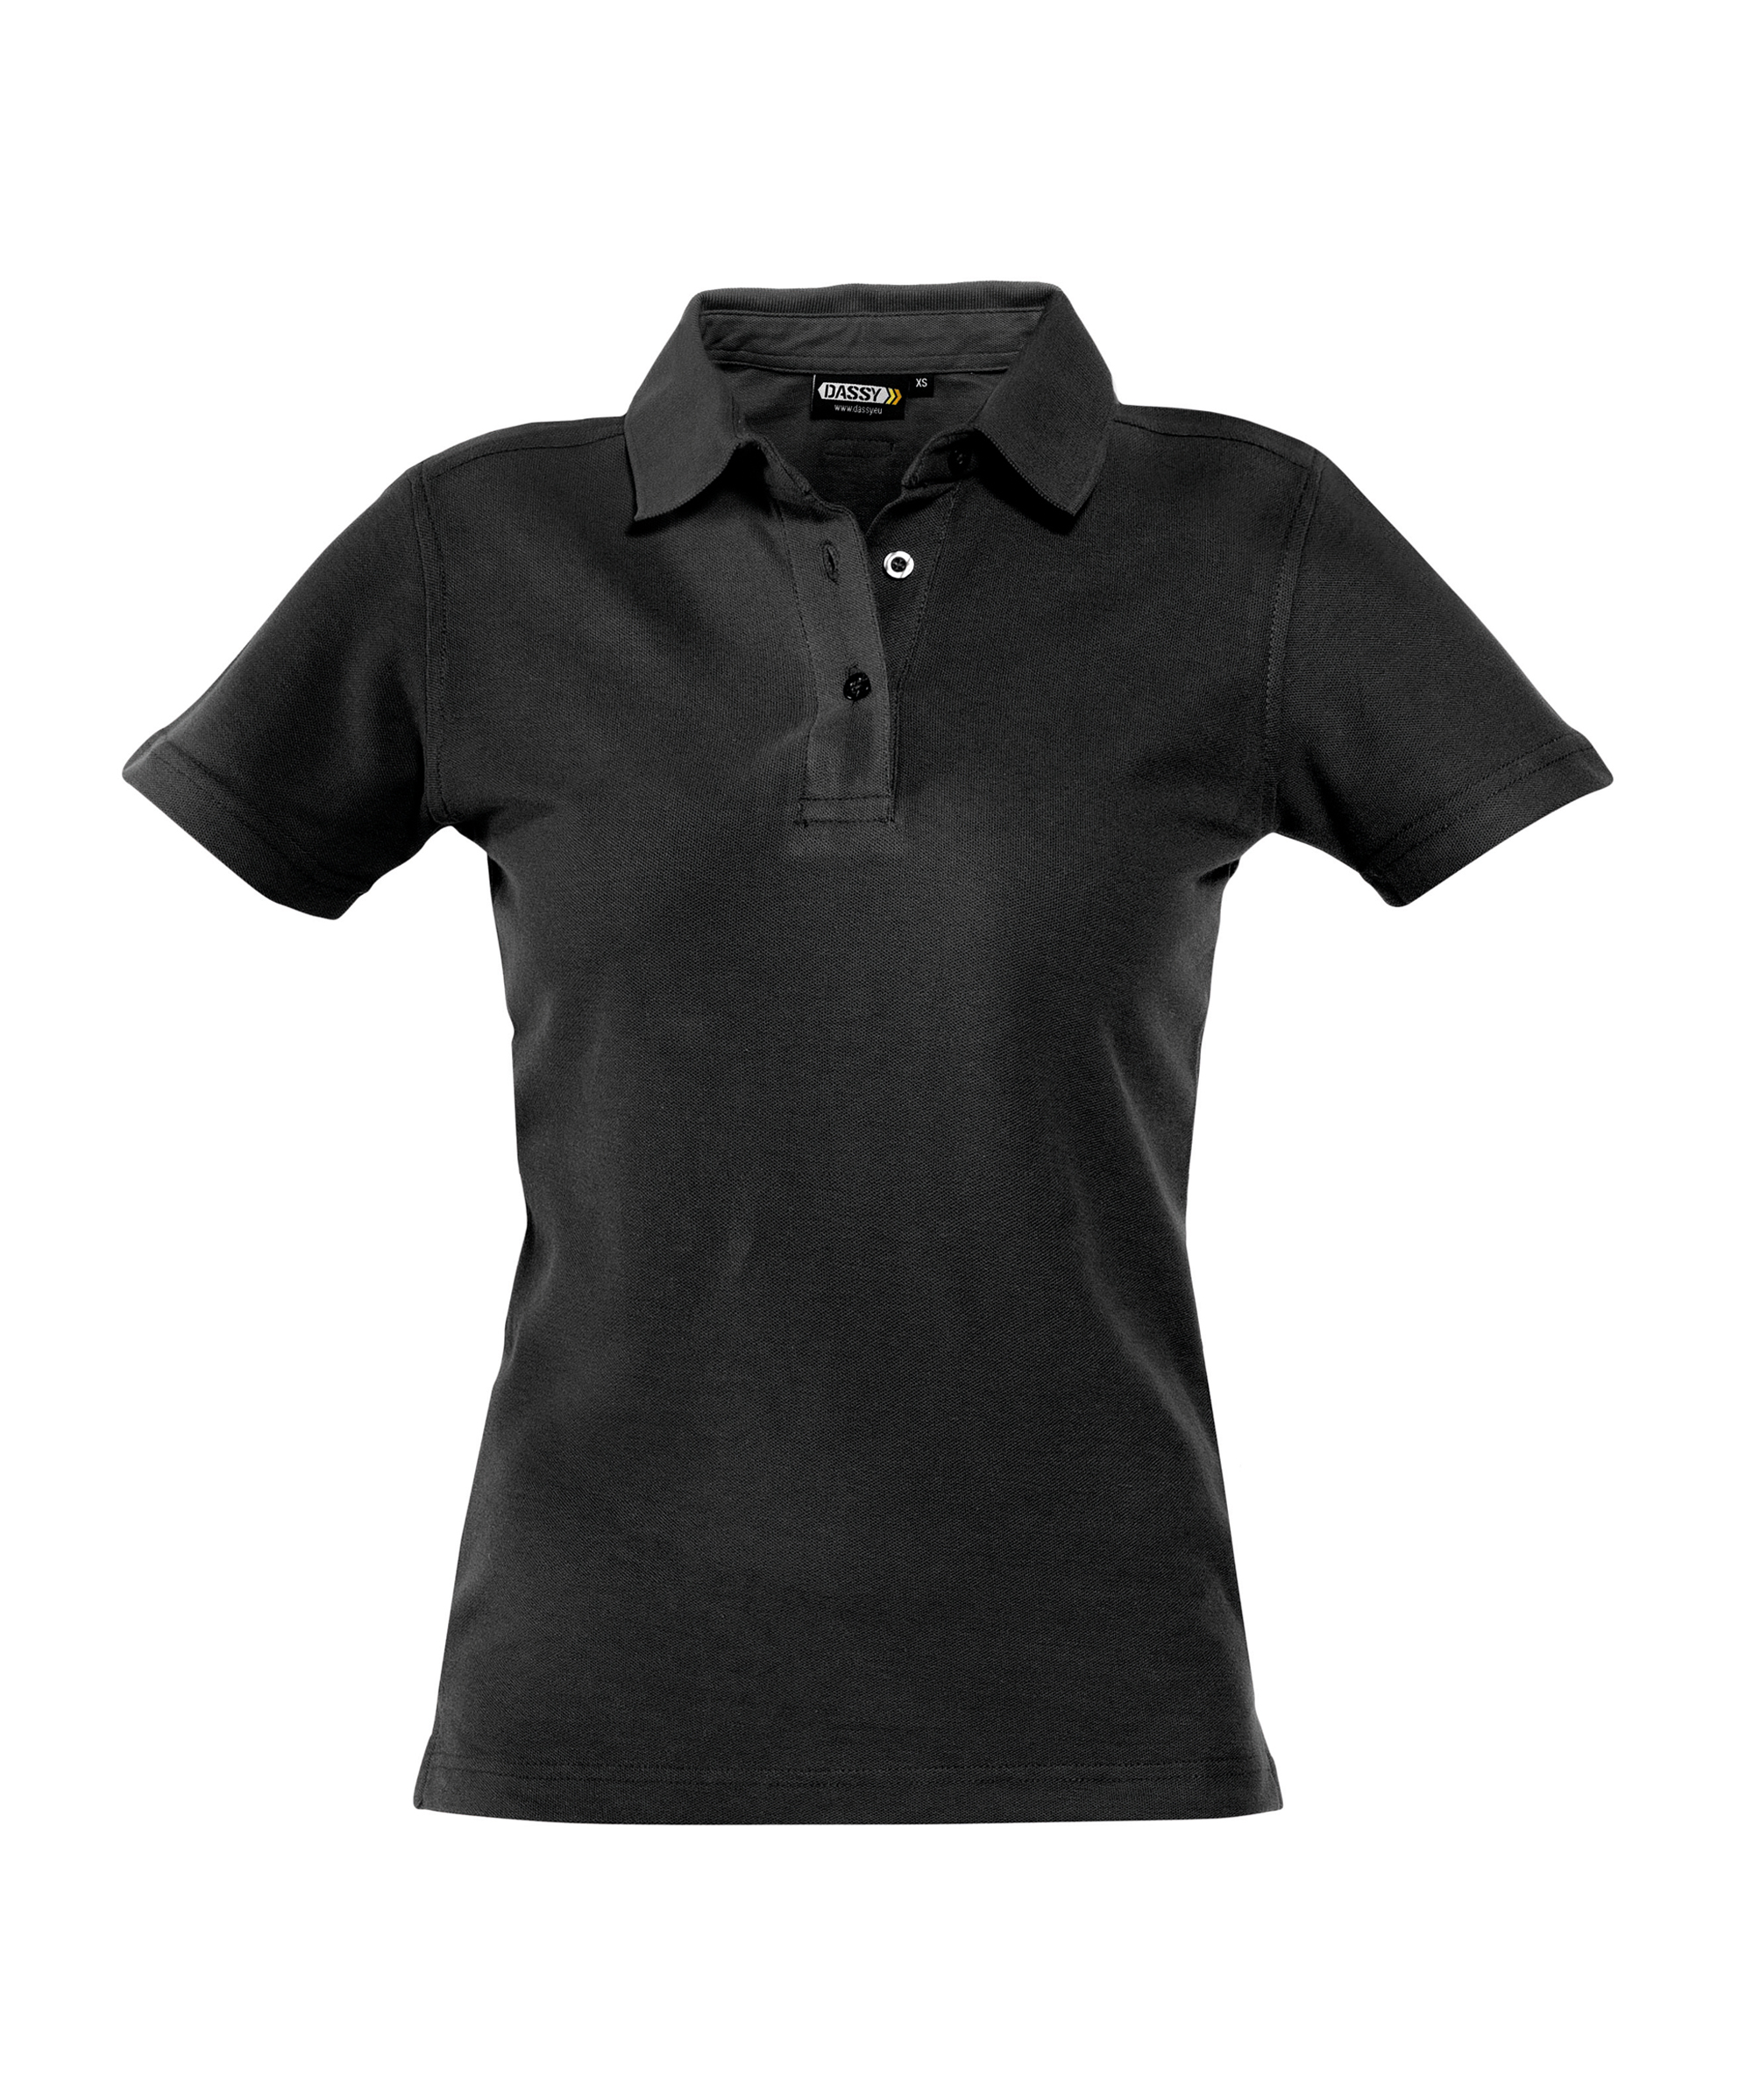 leon-women_polo-shirt_black_front.jpg